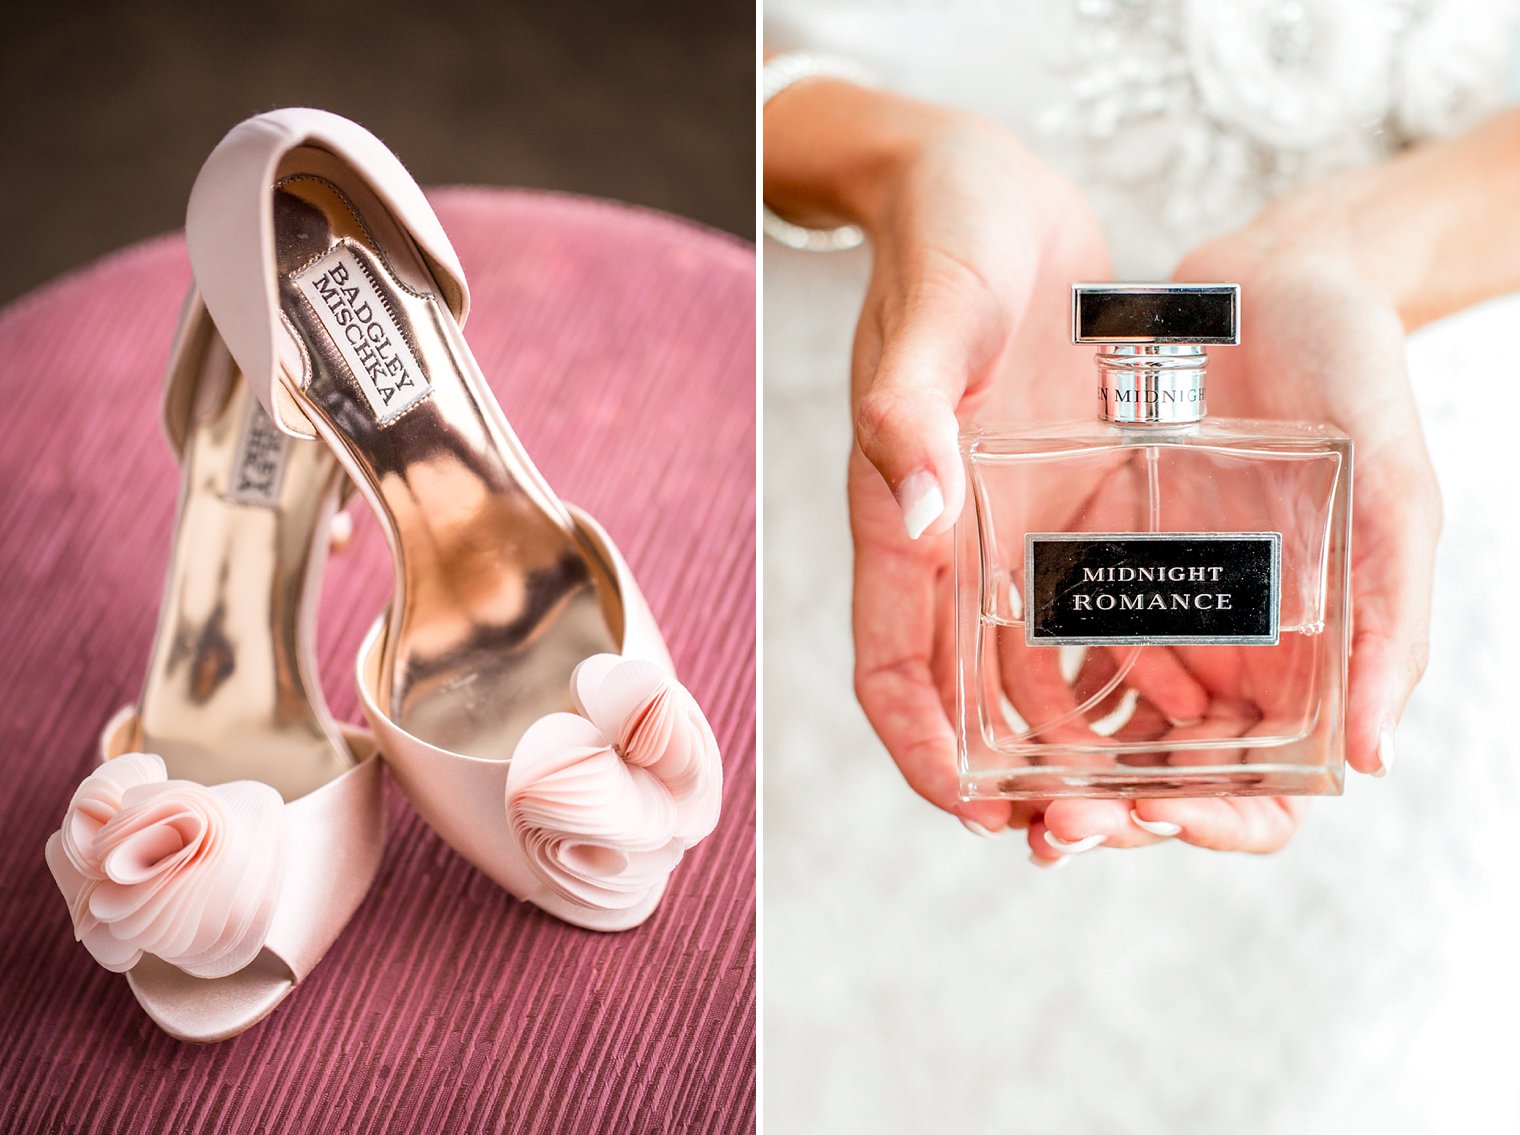 badgley mischka shoes and midnight romance perfume wedding photo